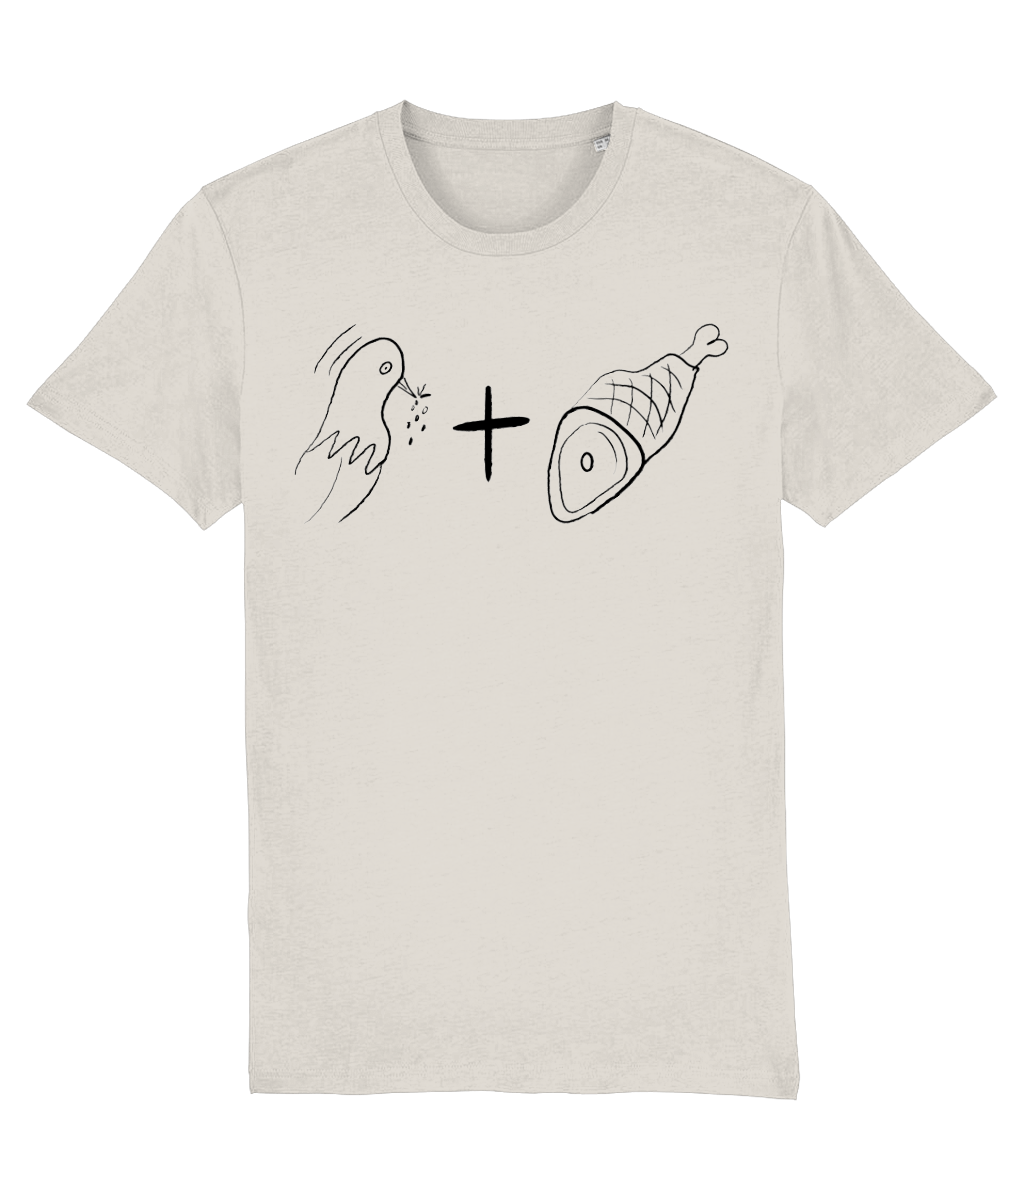 London Hieroglyphics (Variations) Unisex T-Shirt